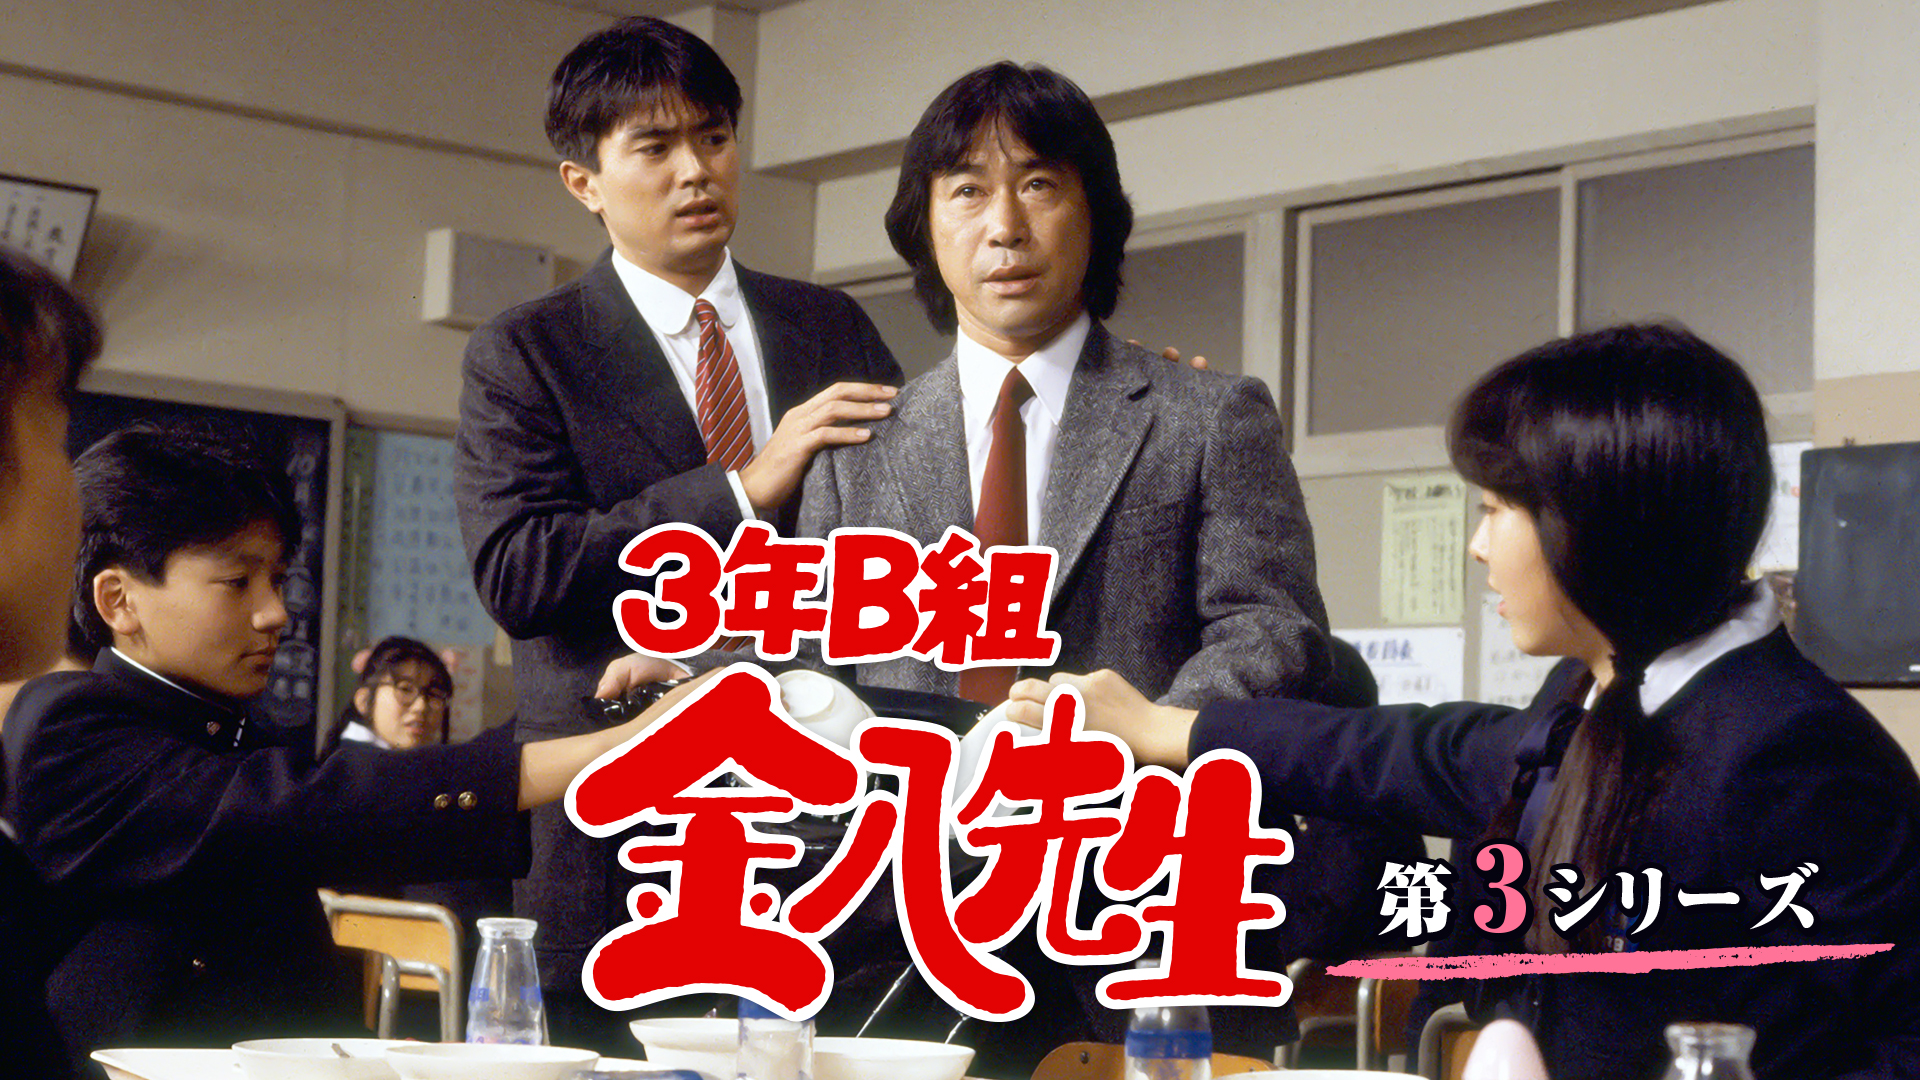 3年B組金八先生(第3シリーズ)(国内ドラマ / 1988) - 動画配信 | U-NEXT ...